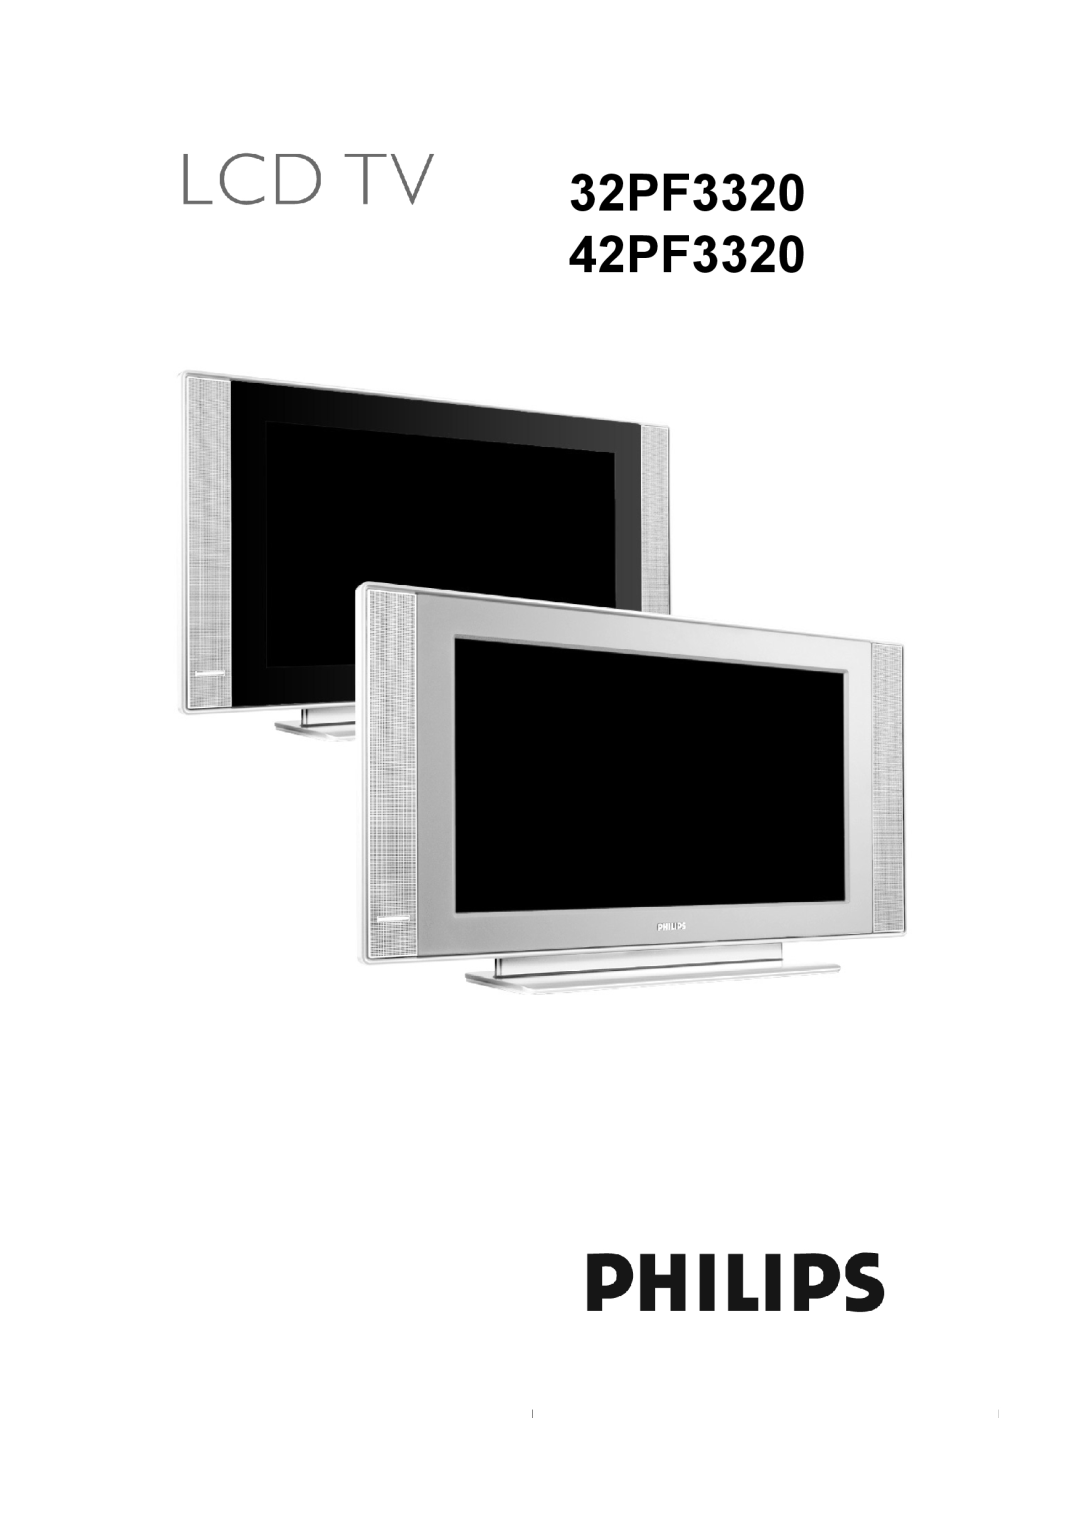 Philips manual 32PF3320 42PF3320 